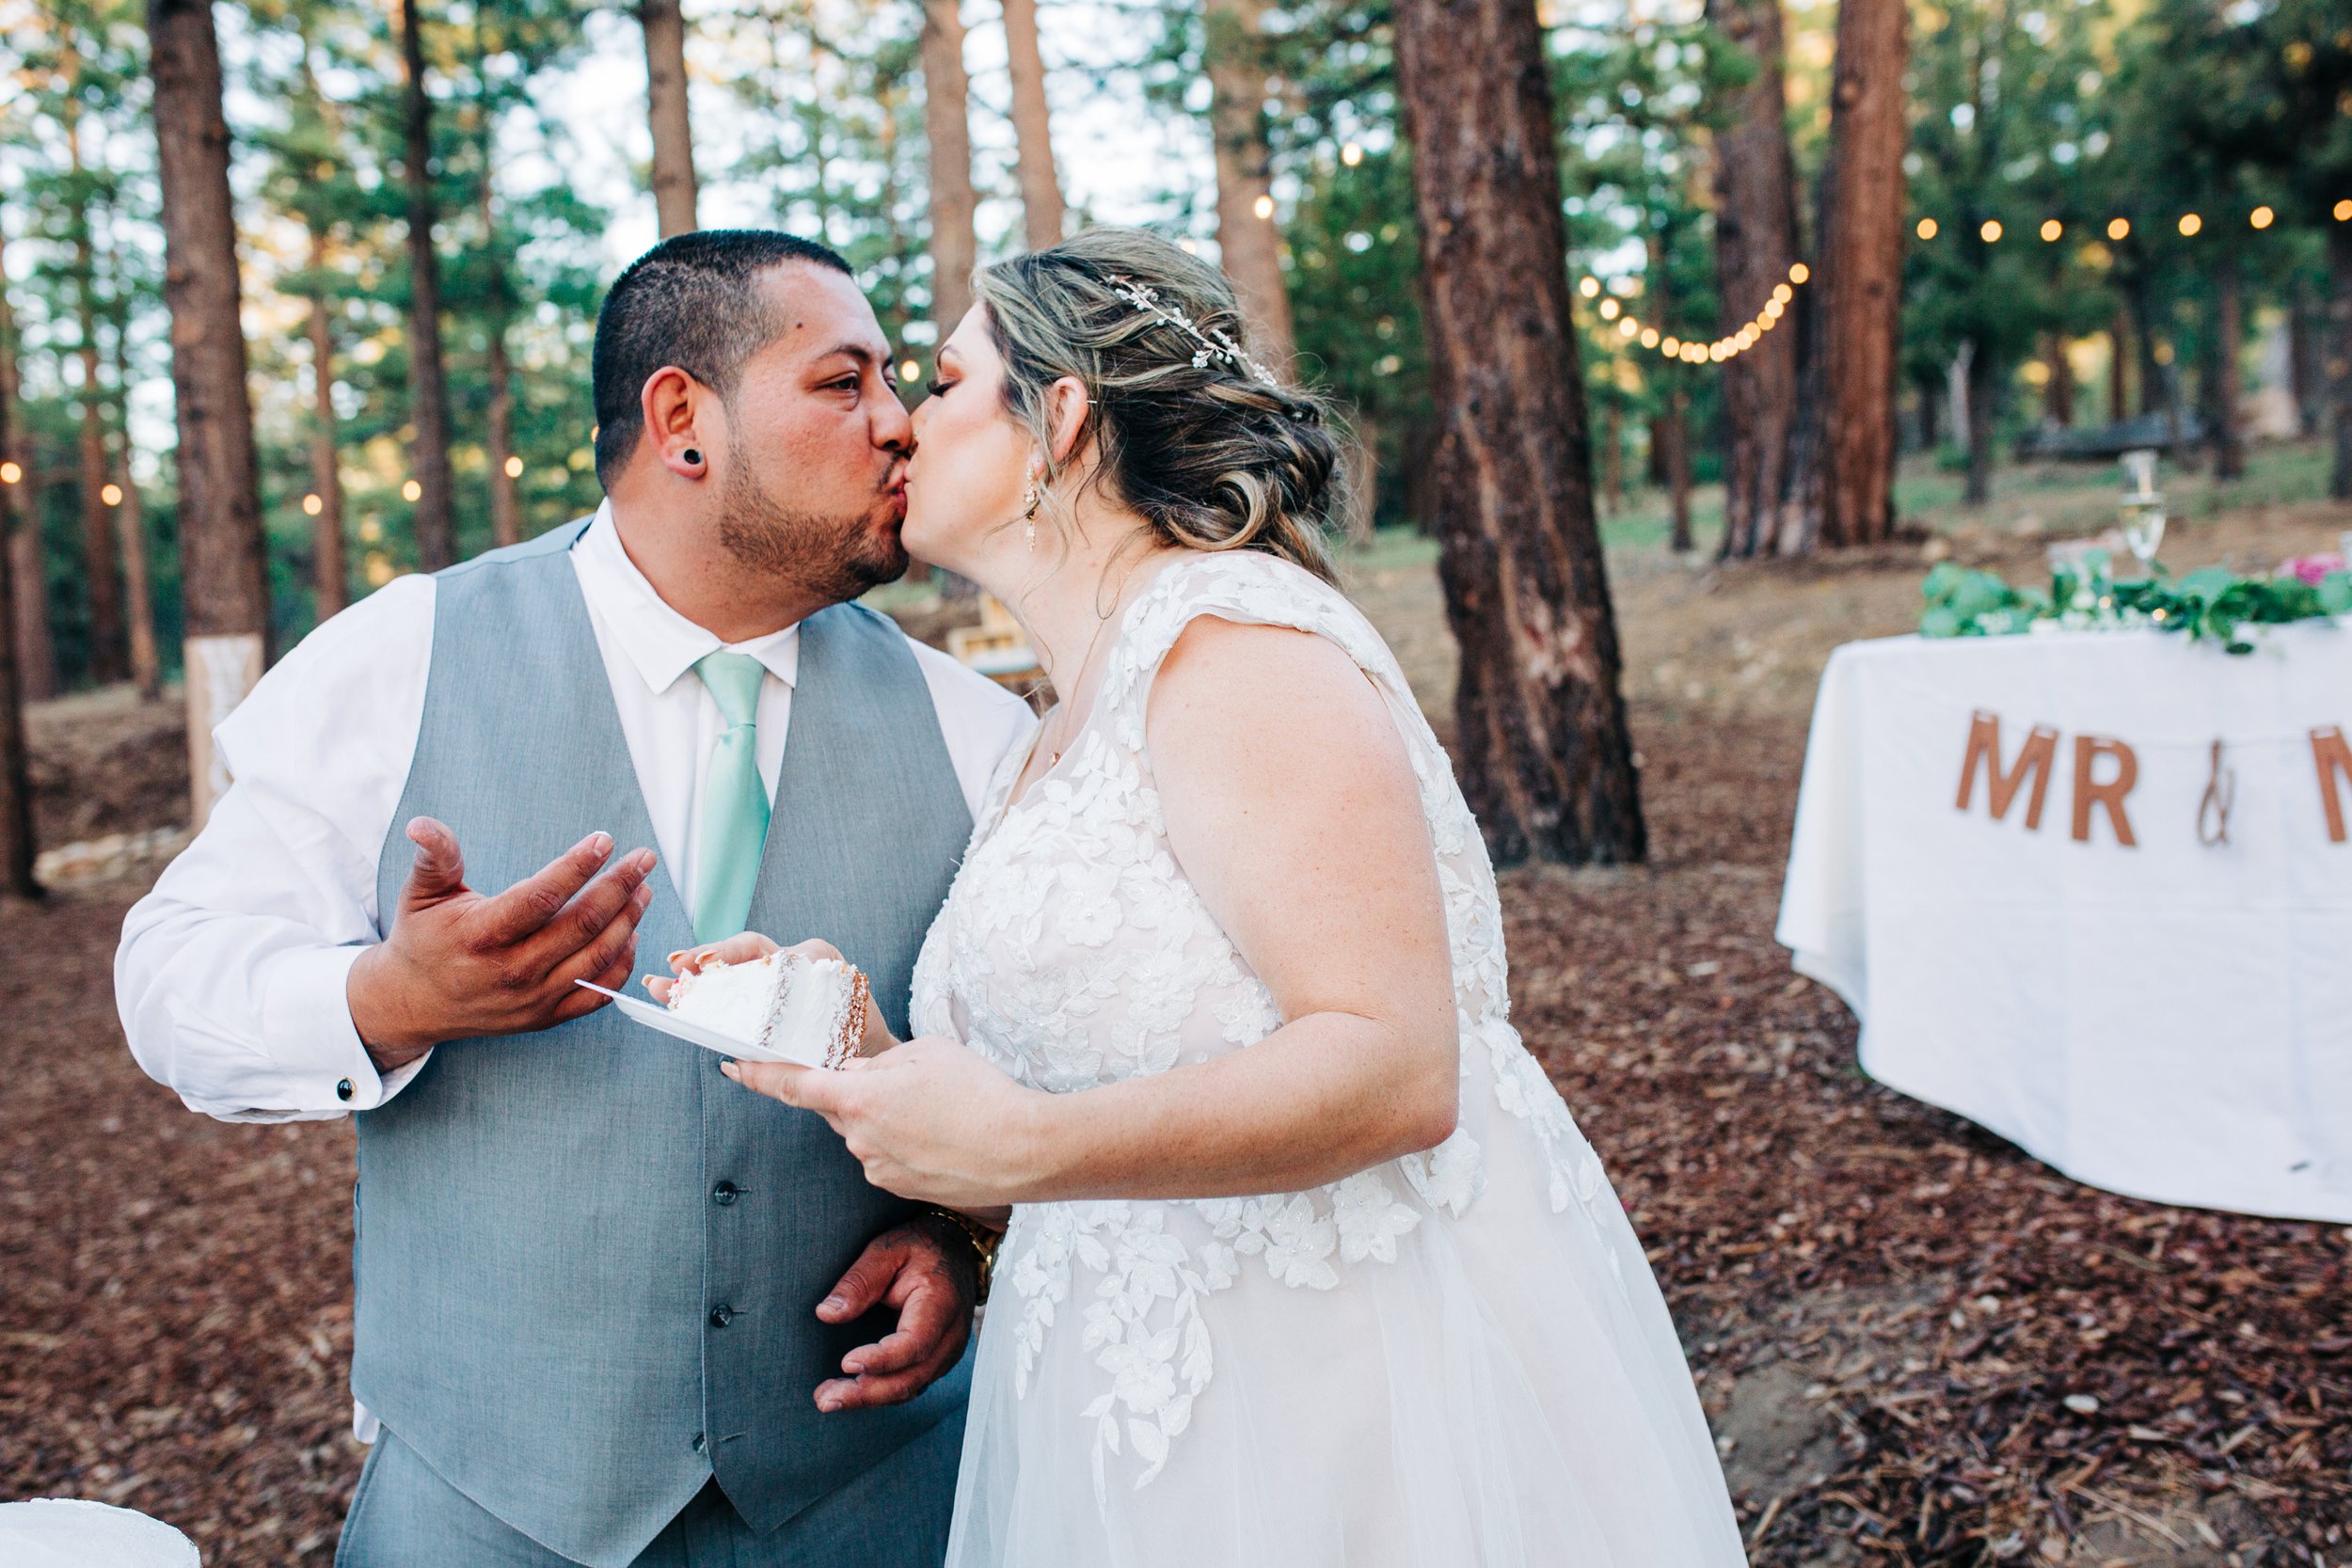 bride and groom feeding wedding cake and kissing.jpg